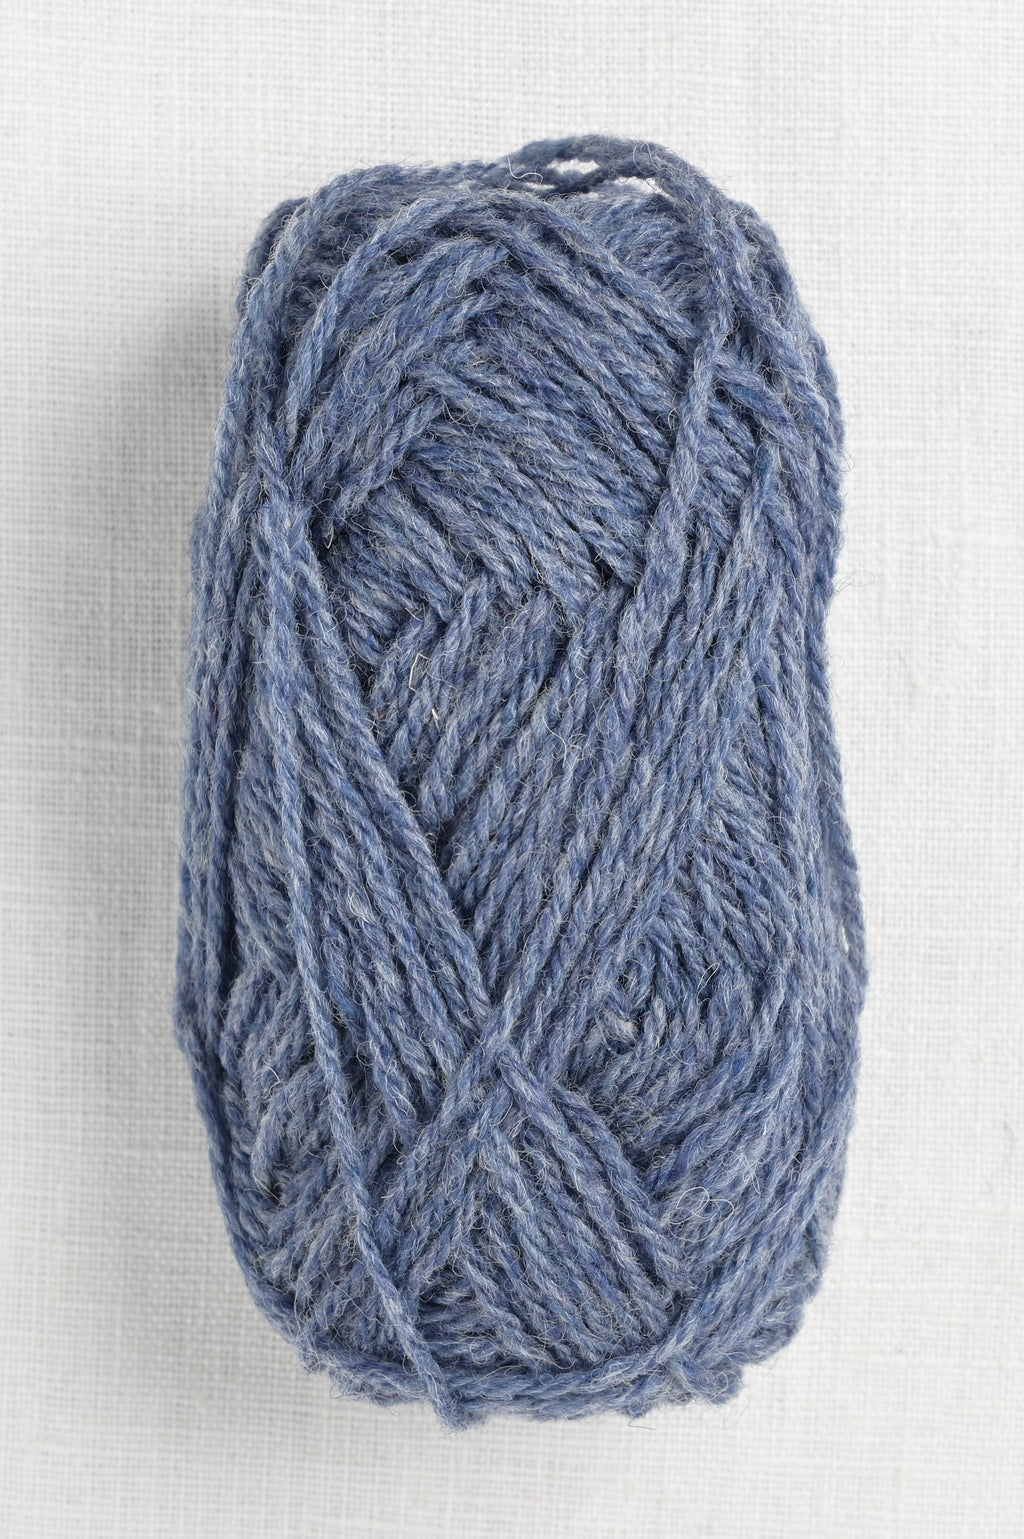 jamieson's shetland double knitting 170 fjord